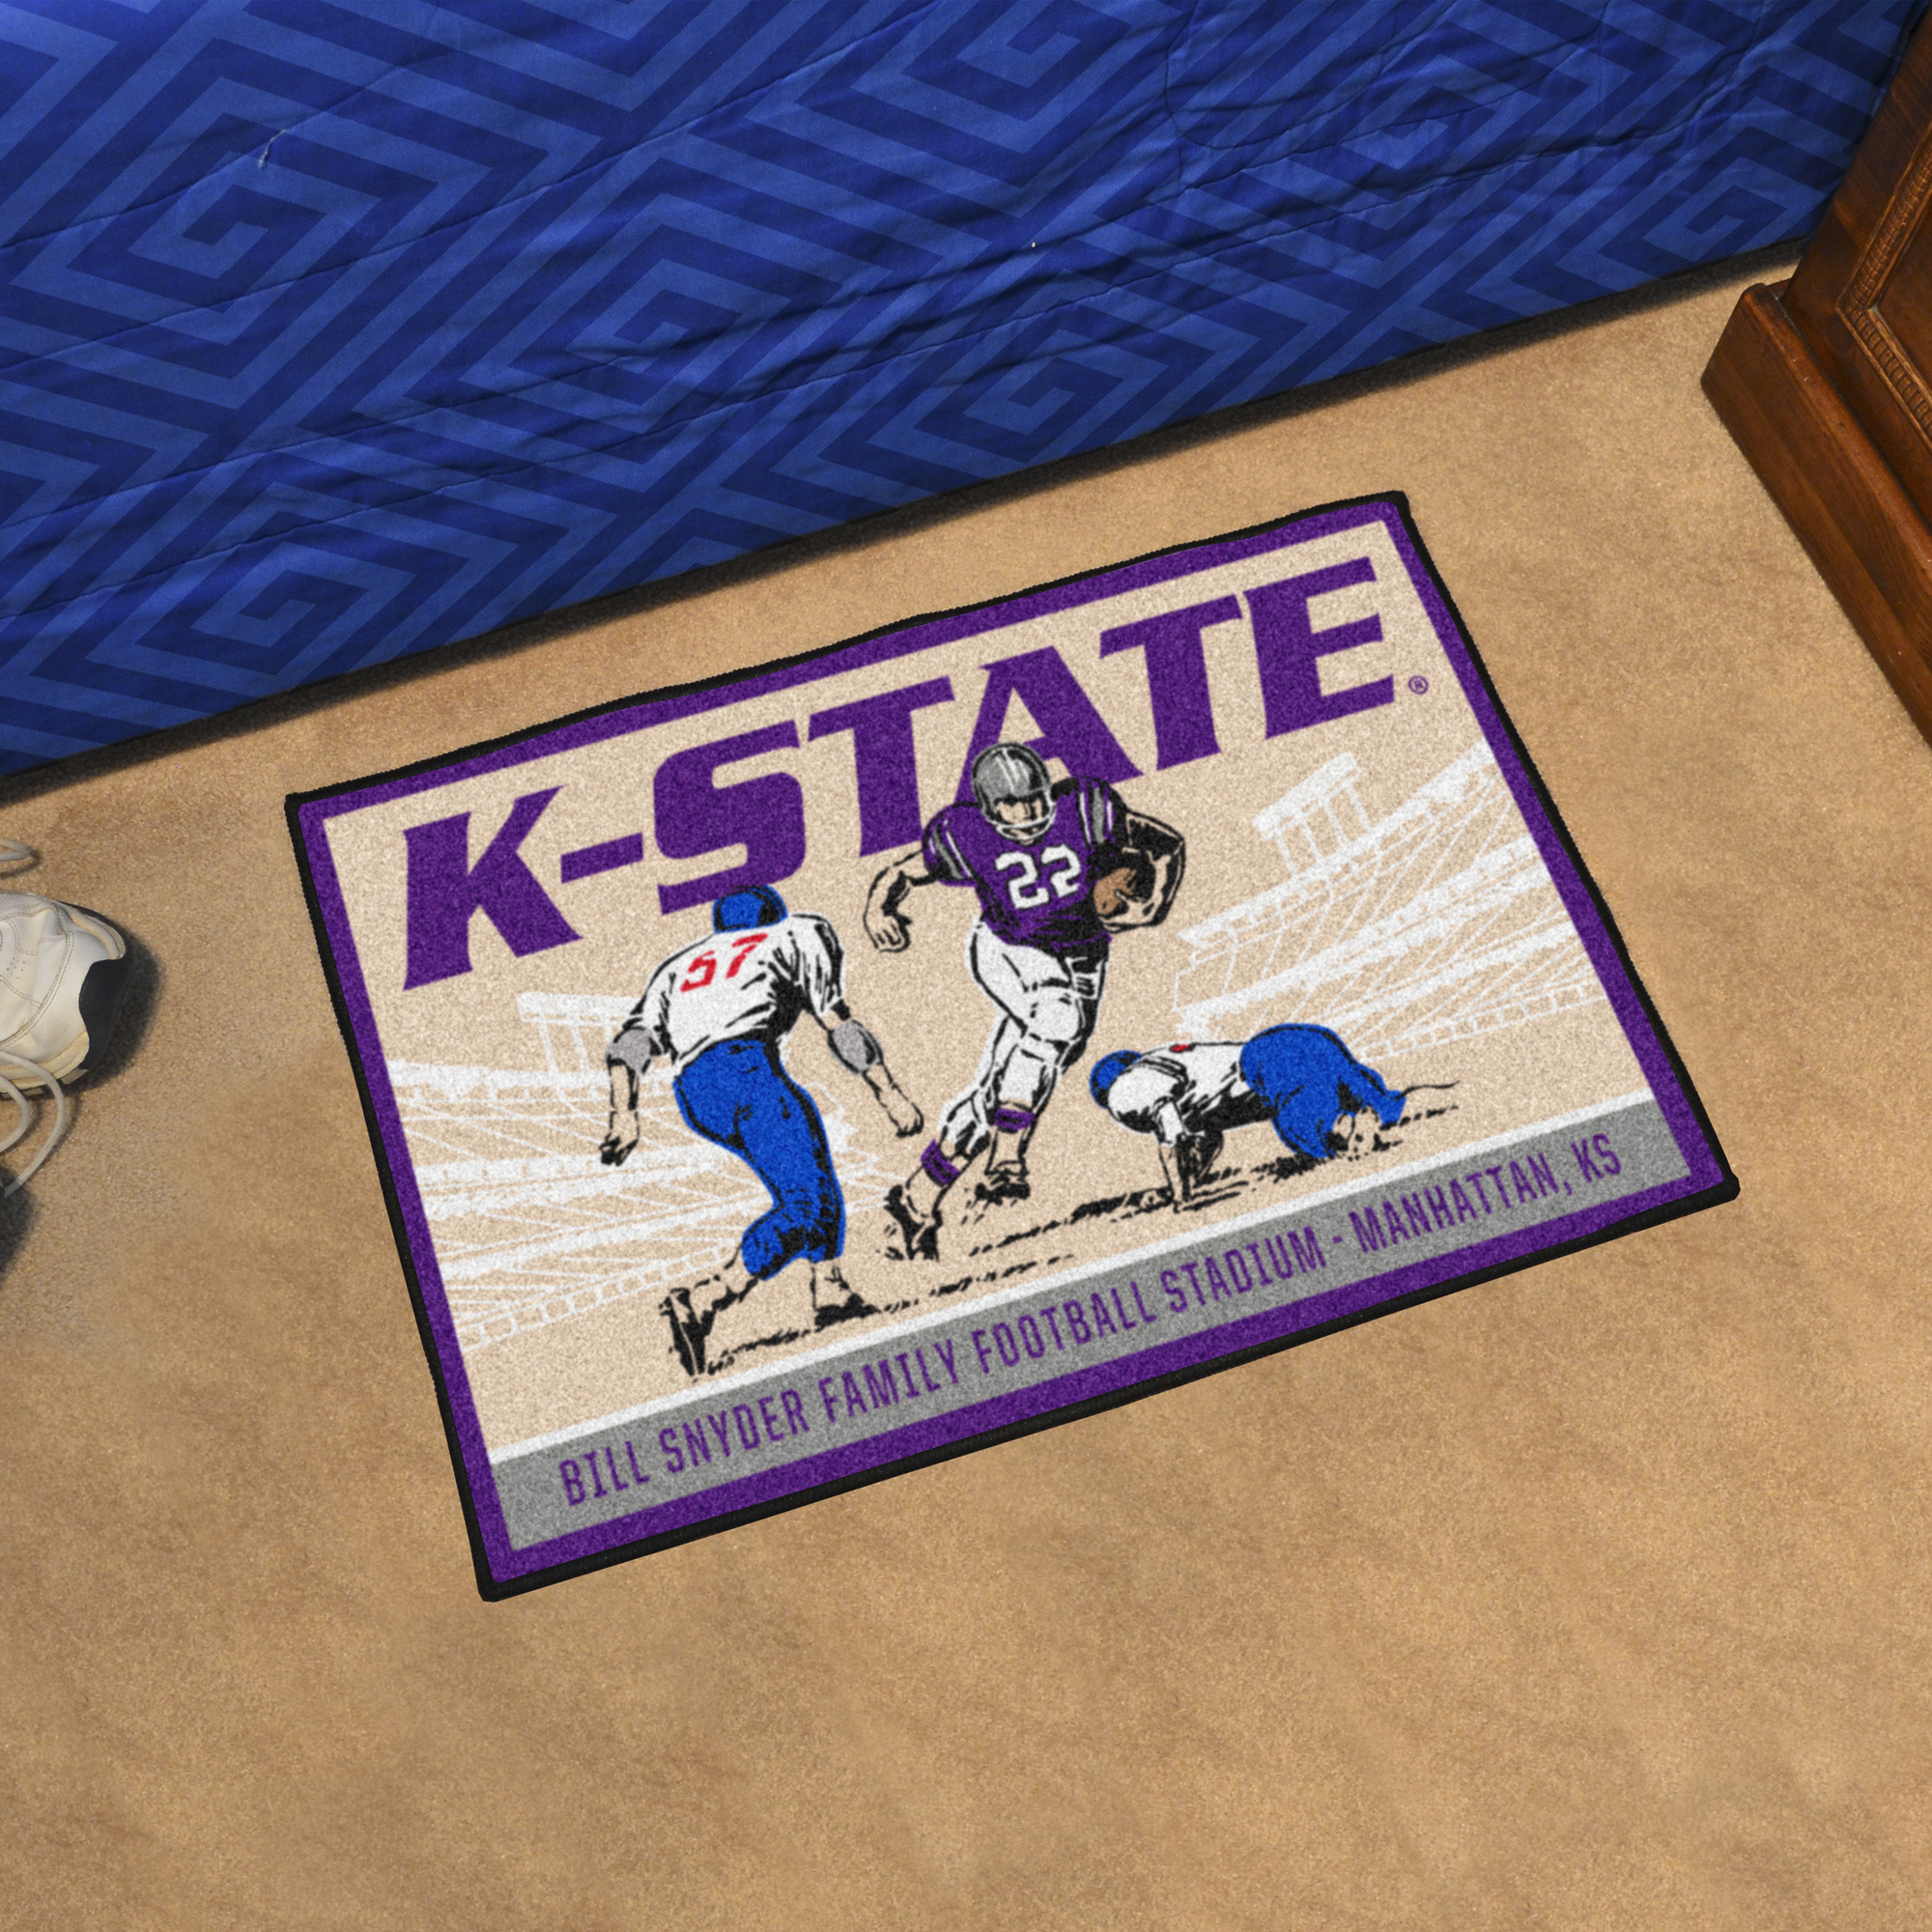 KSU Ticket Design Starter Doormat -19 x 30